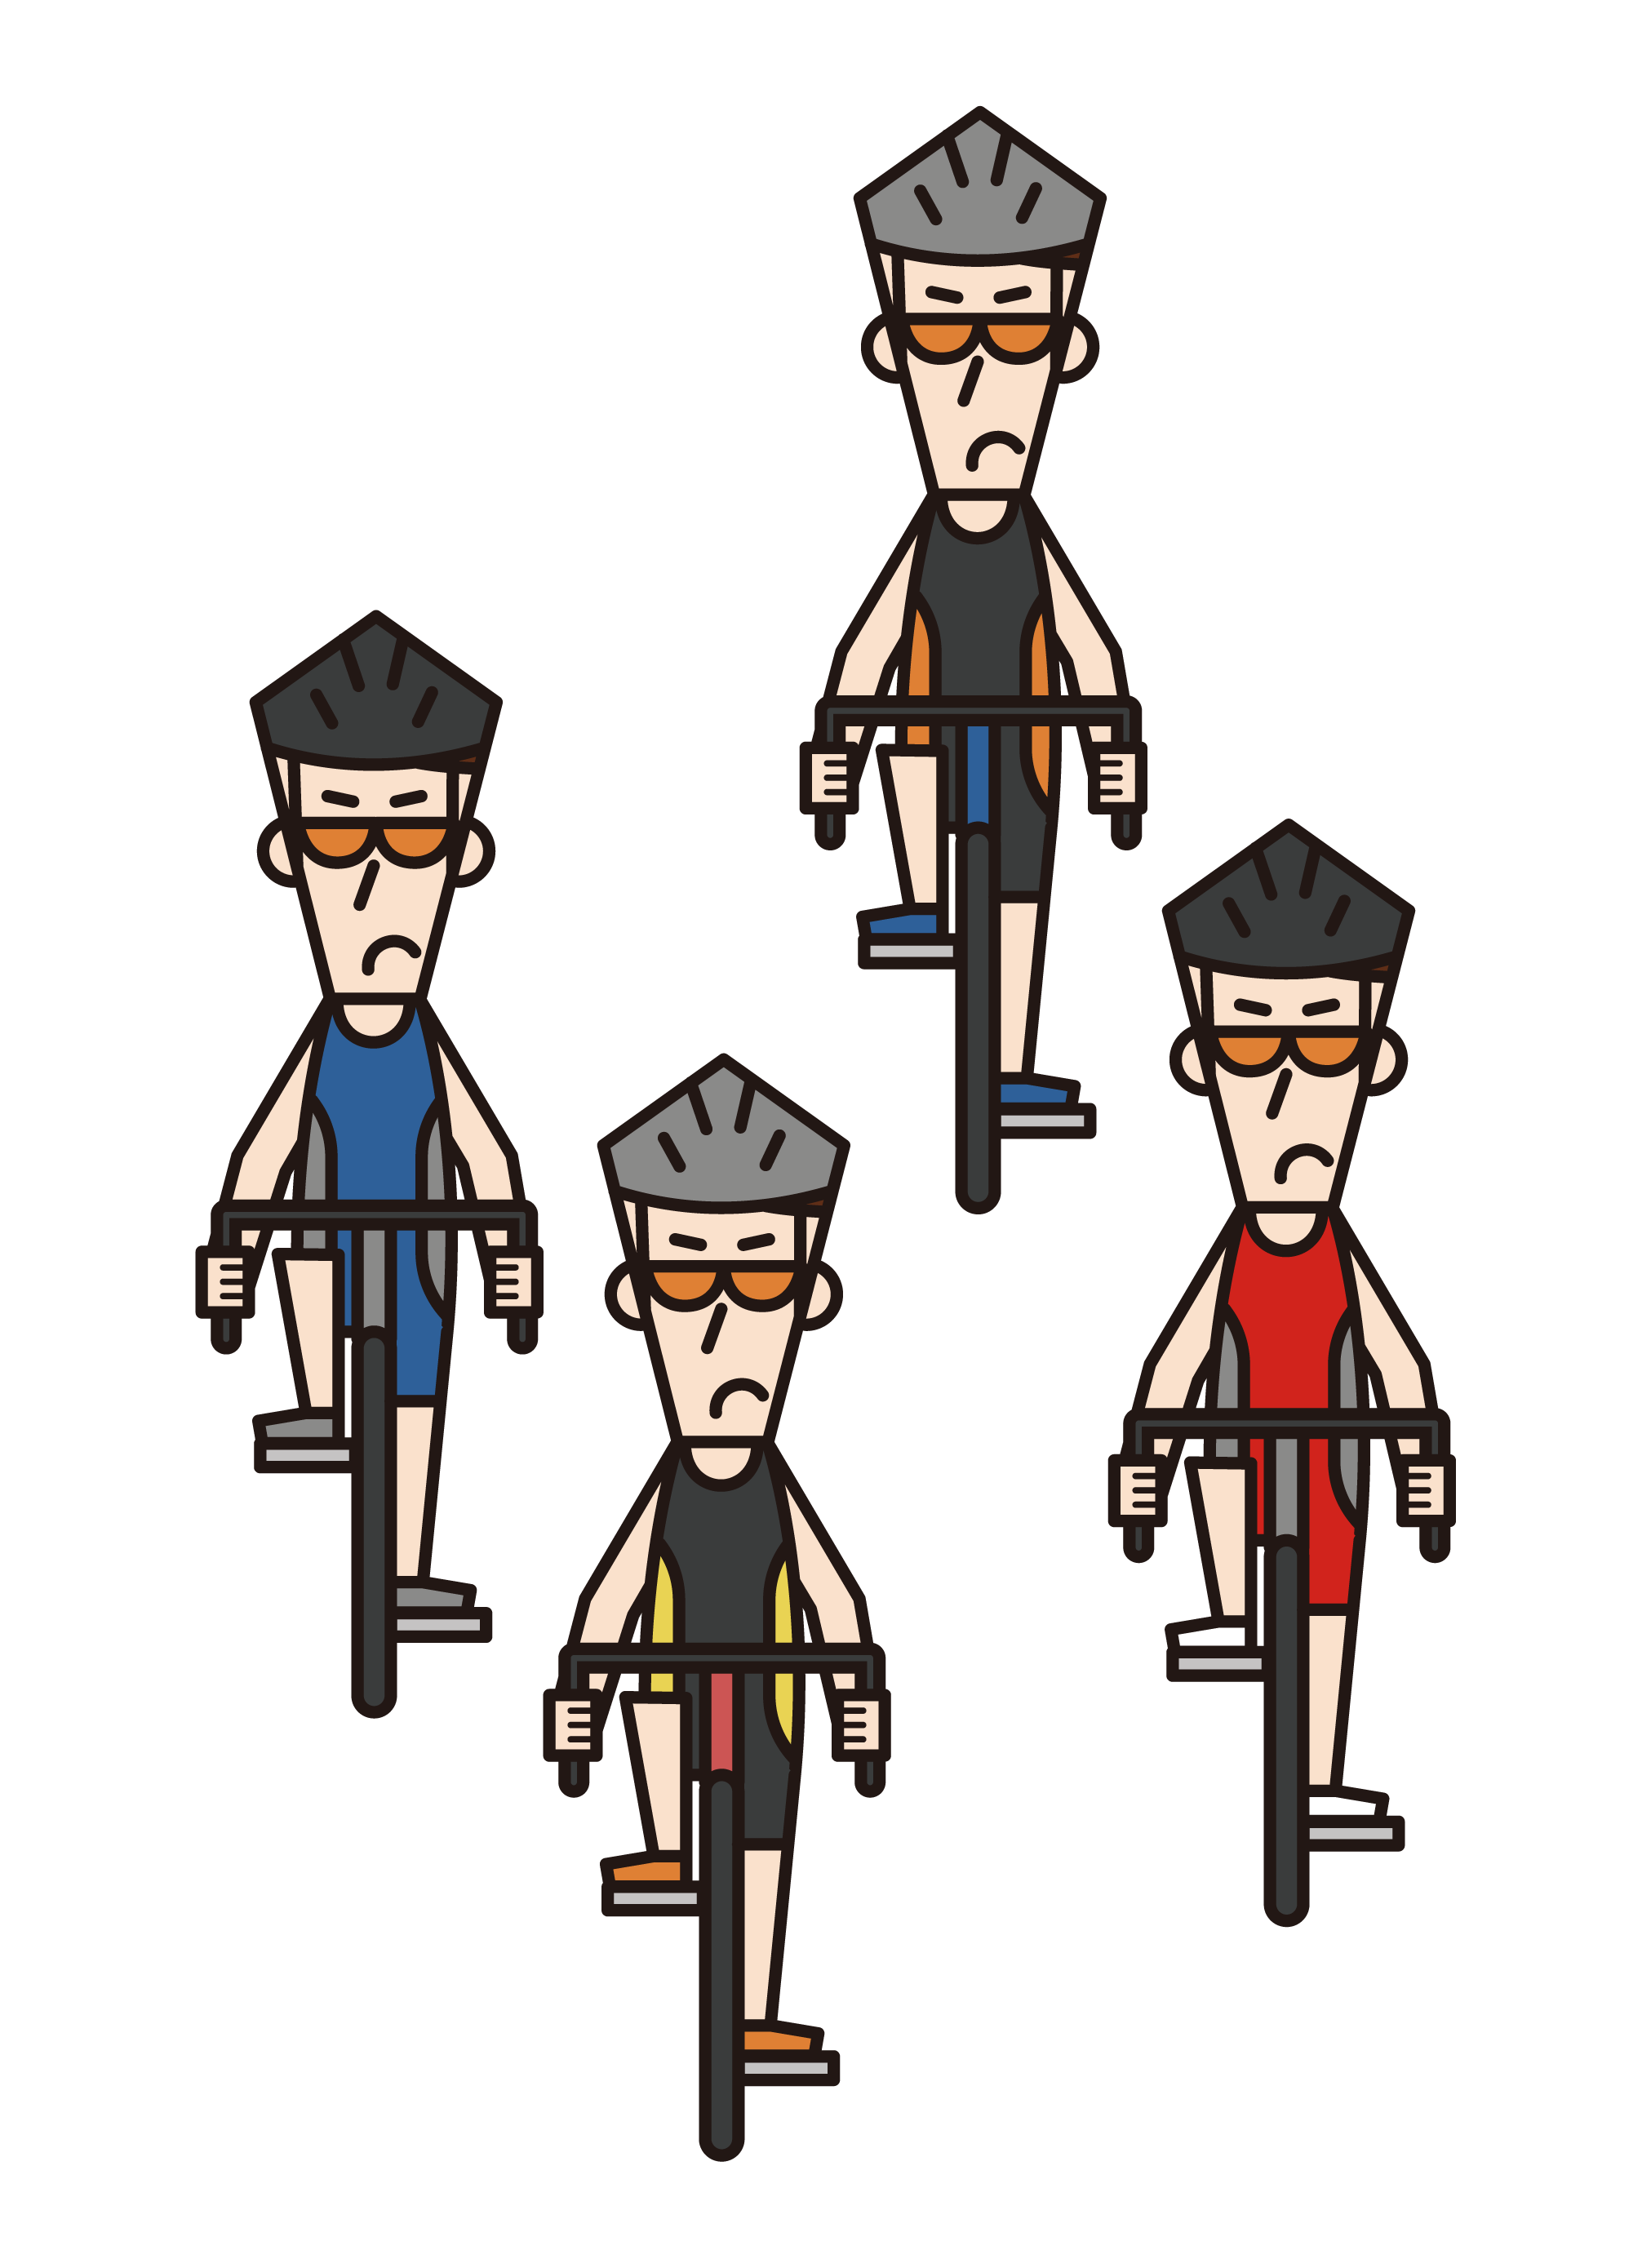 Illustration of a triathlon or cyclist (male) racing